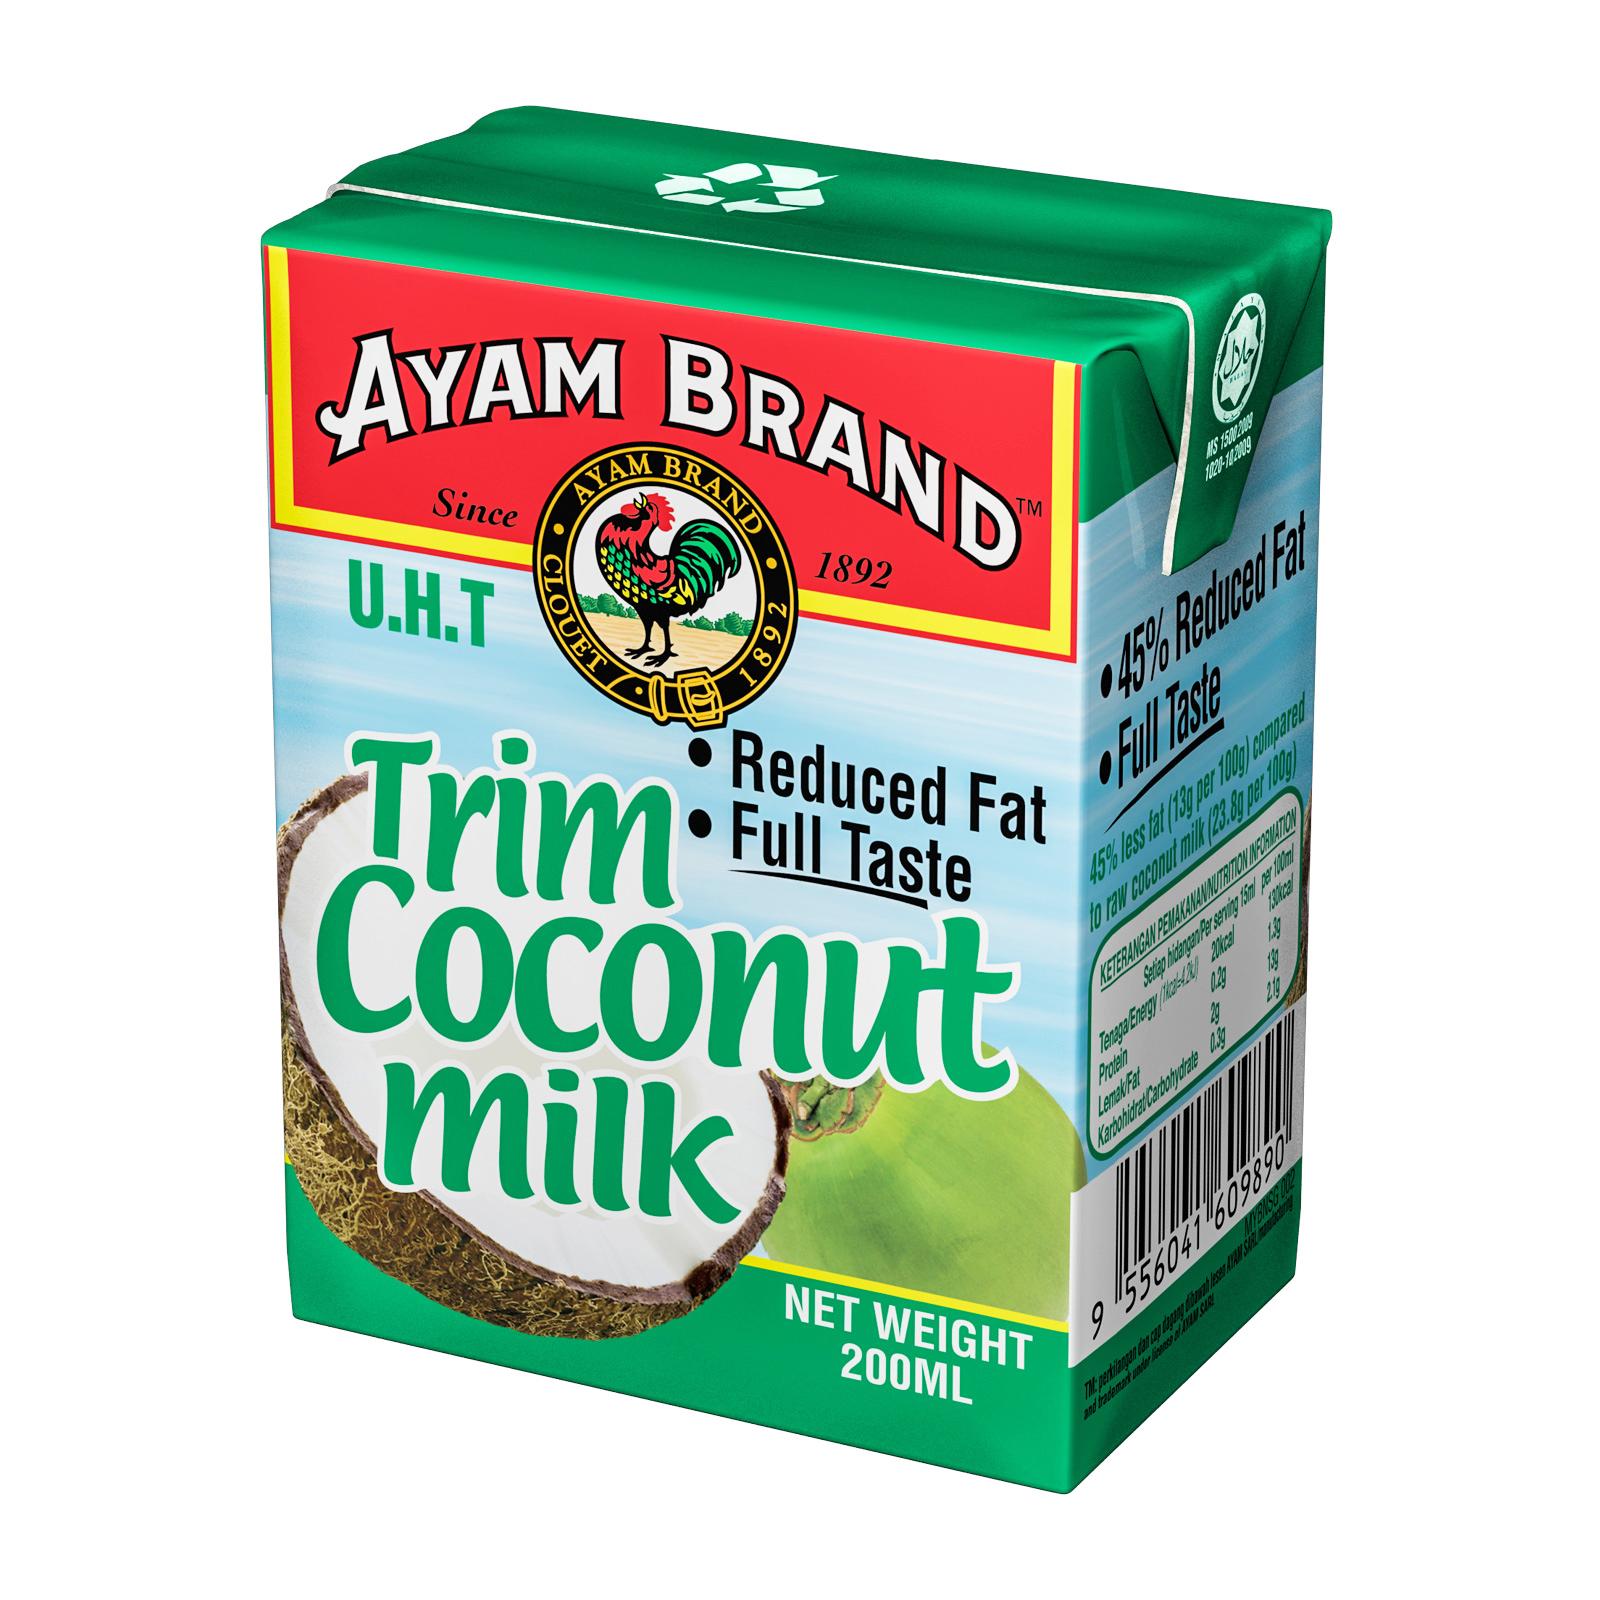 Ayam Brand Coconut Trim Milk reviews